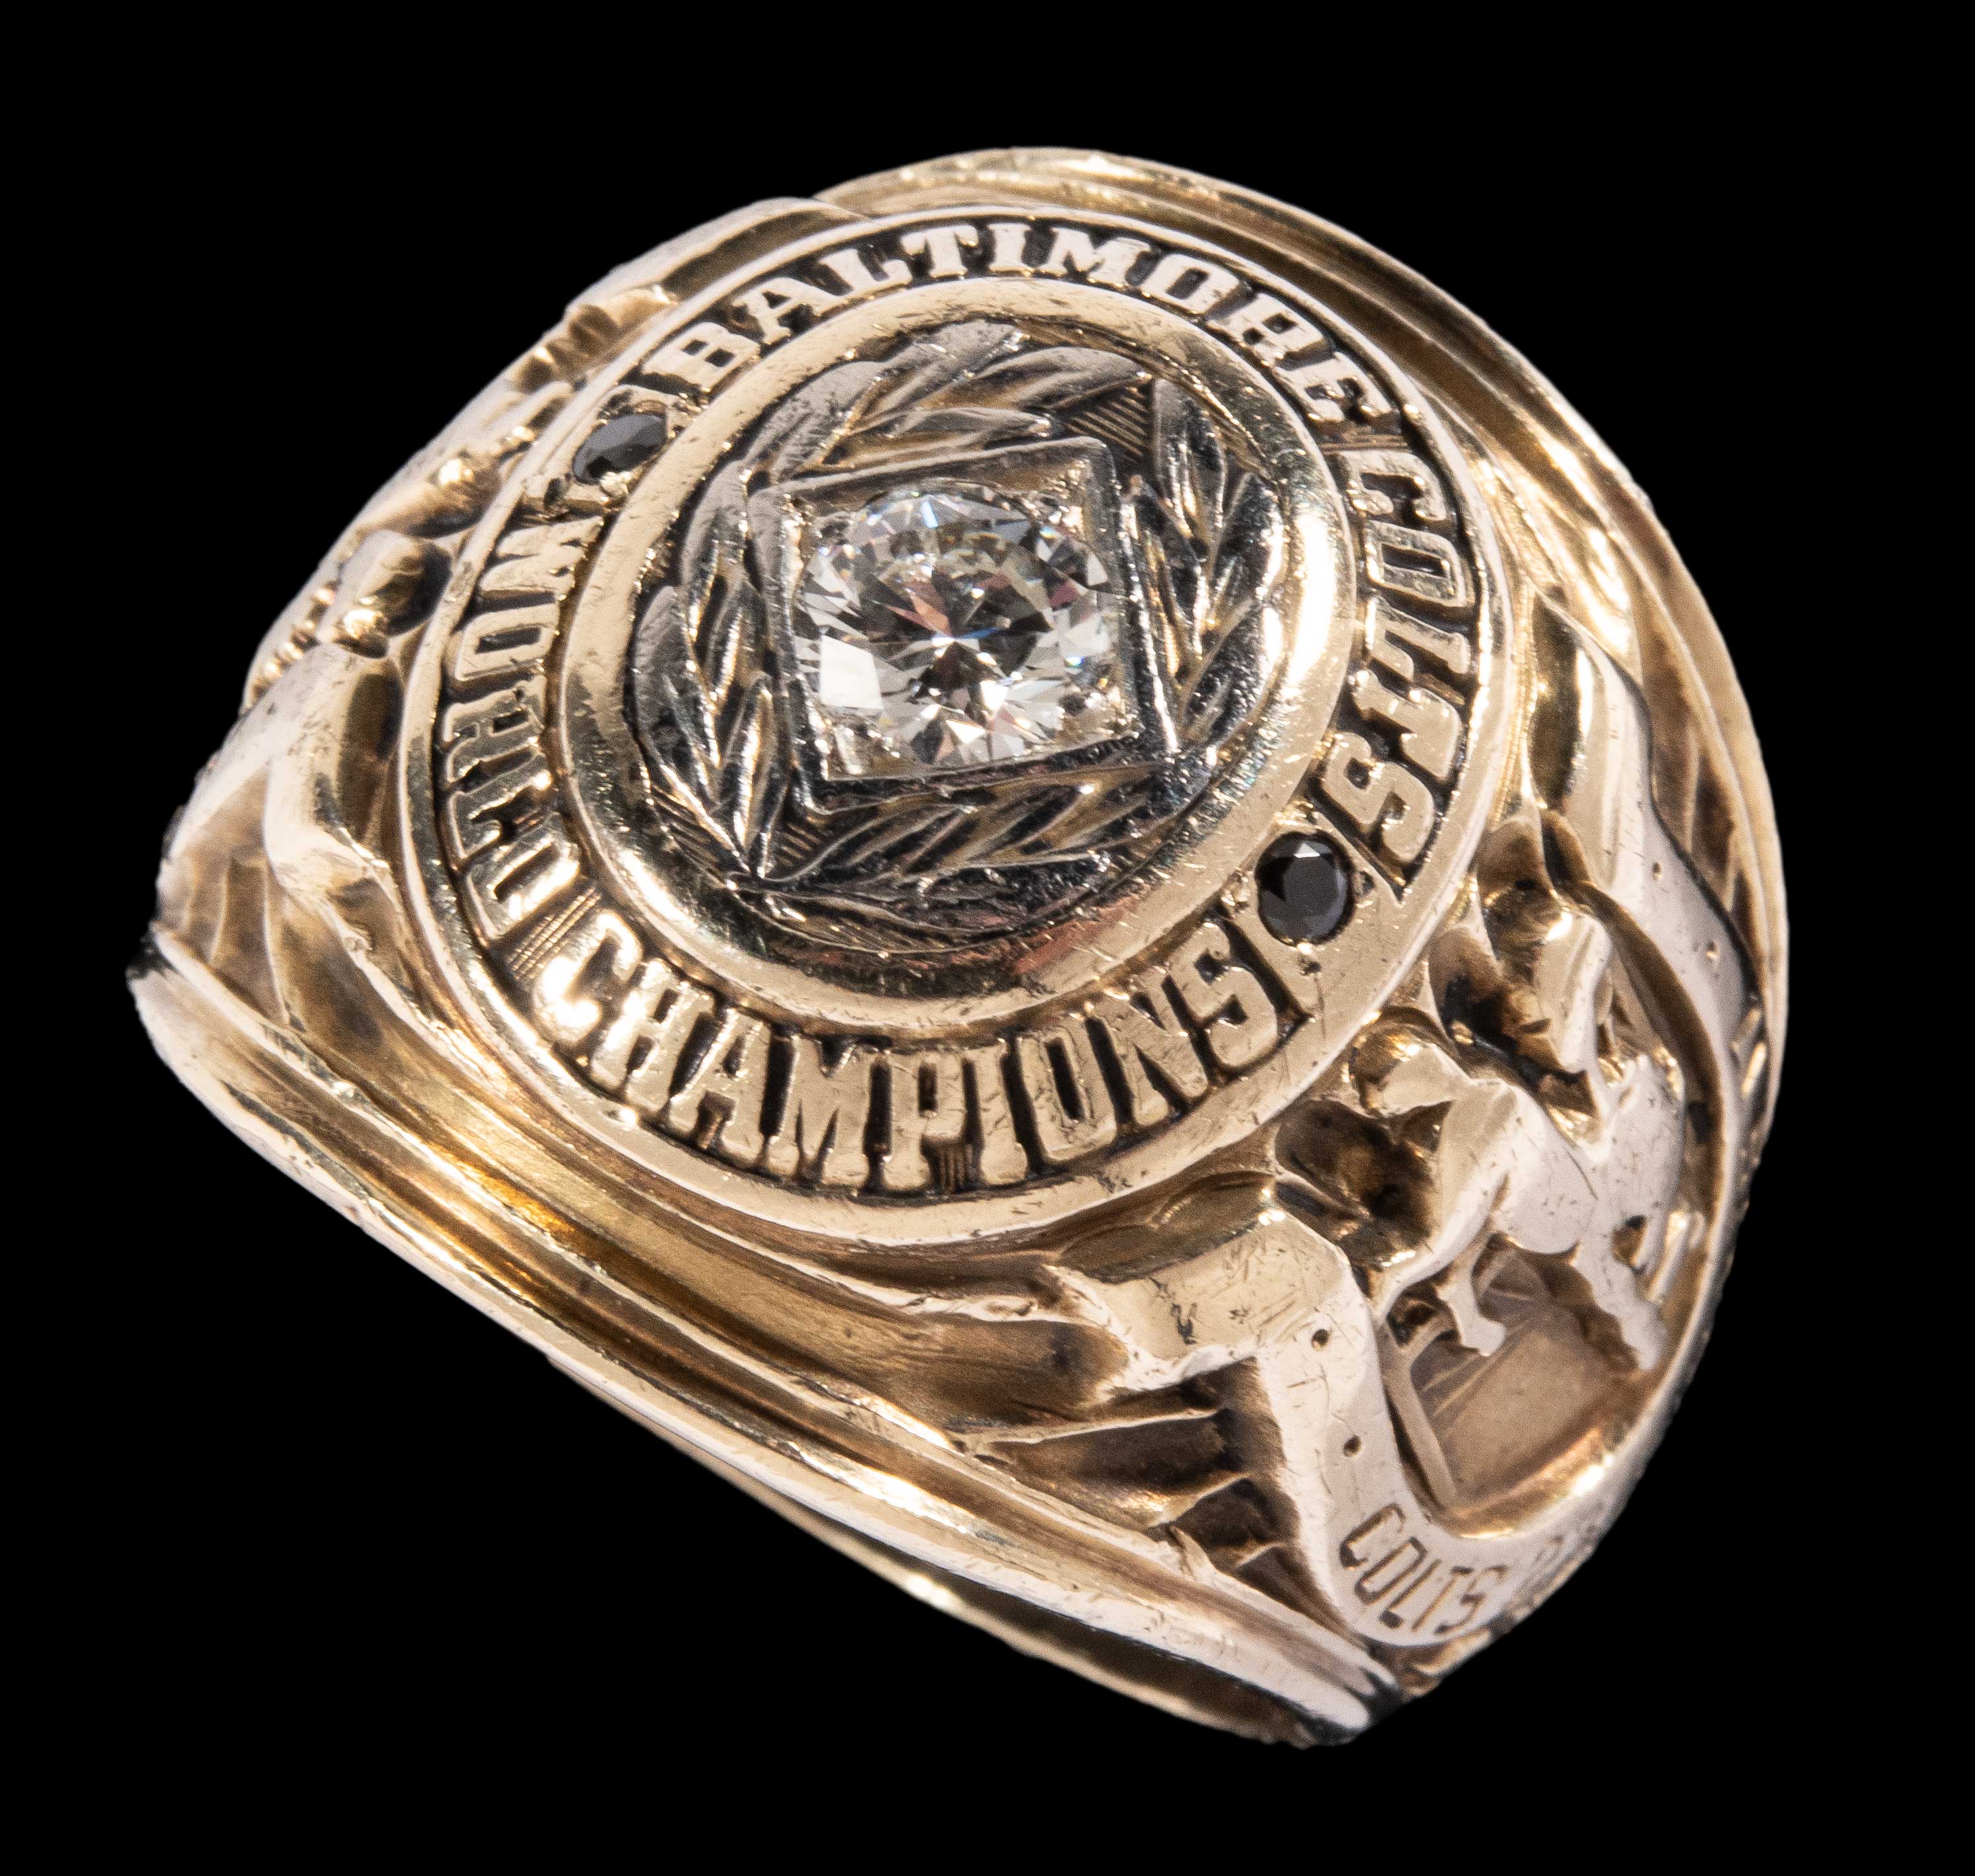 Monumental Johnny Unitas 1958 Baltimore Colts 14K gold Championship ring